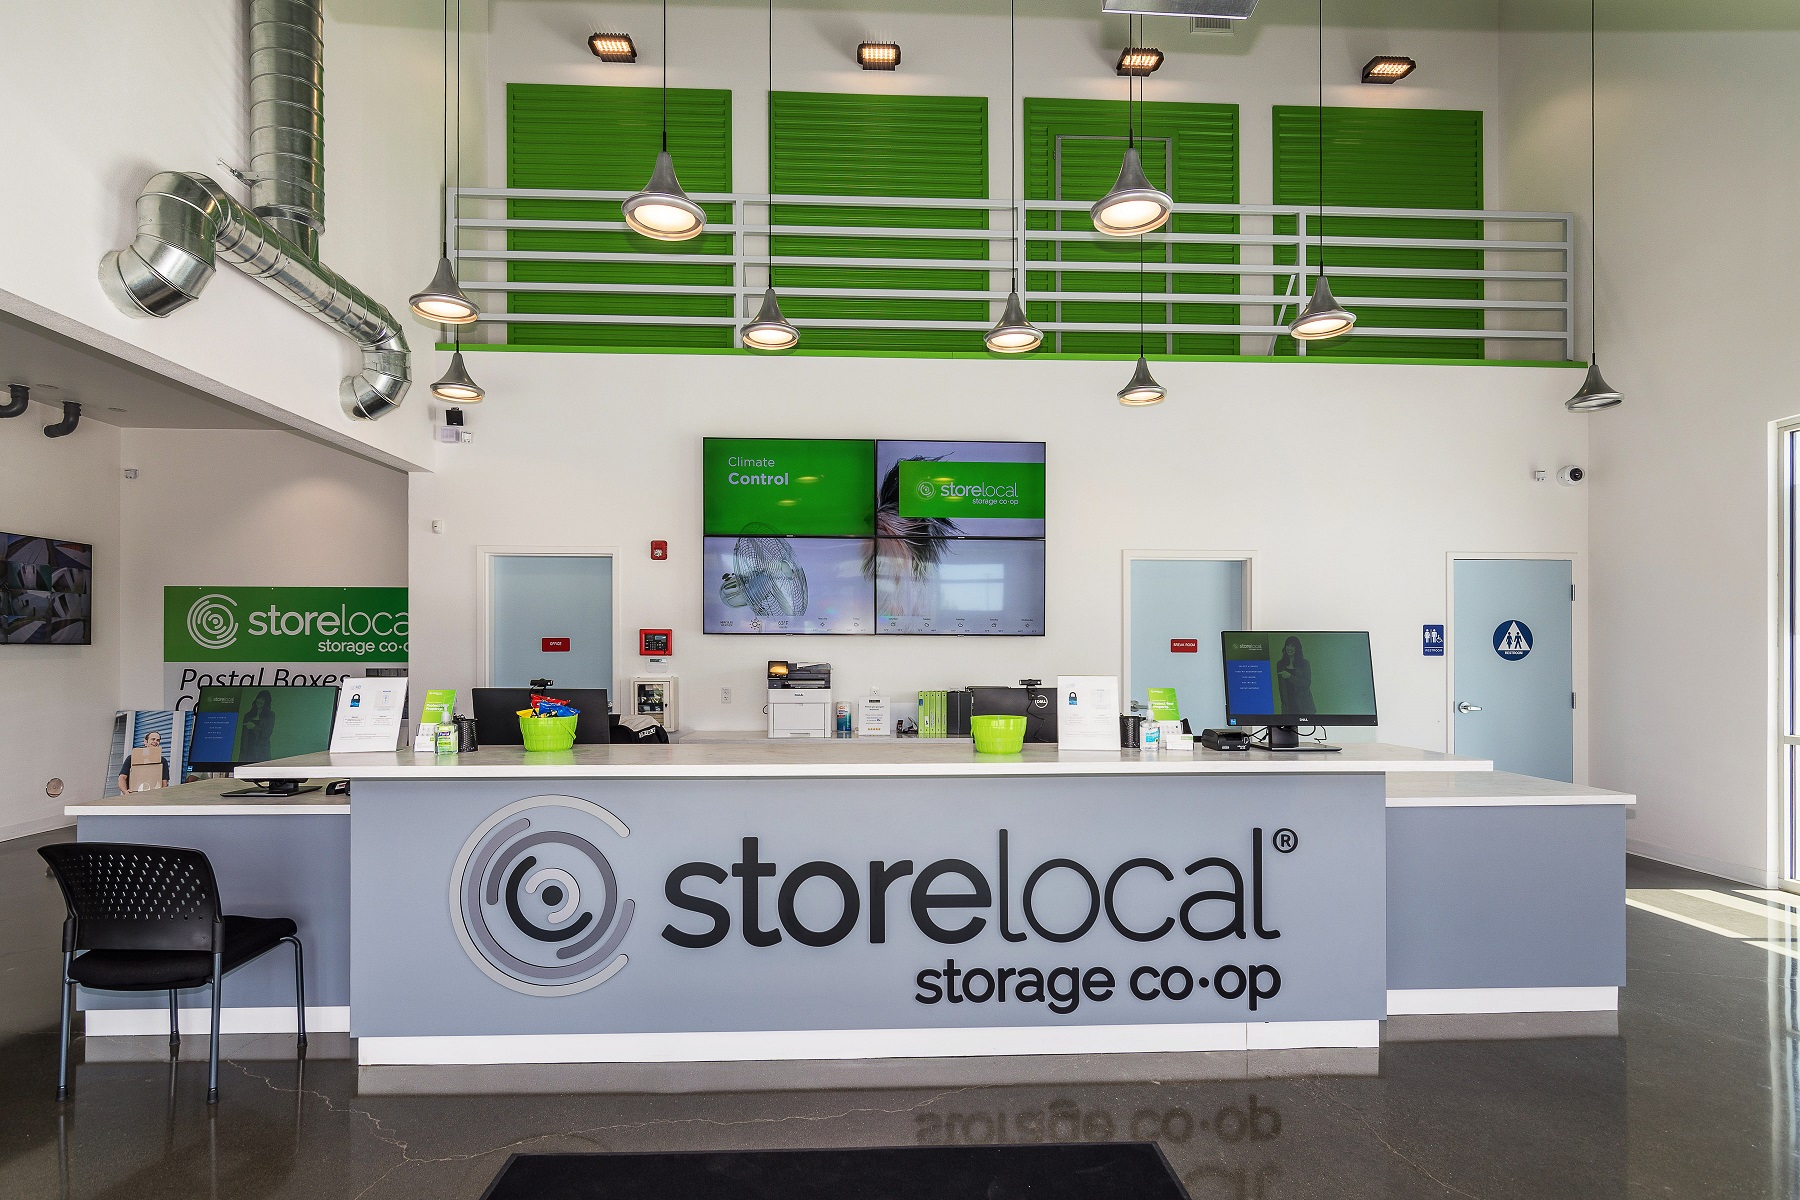 Storelocal Storage